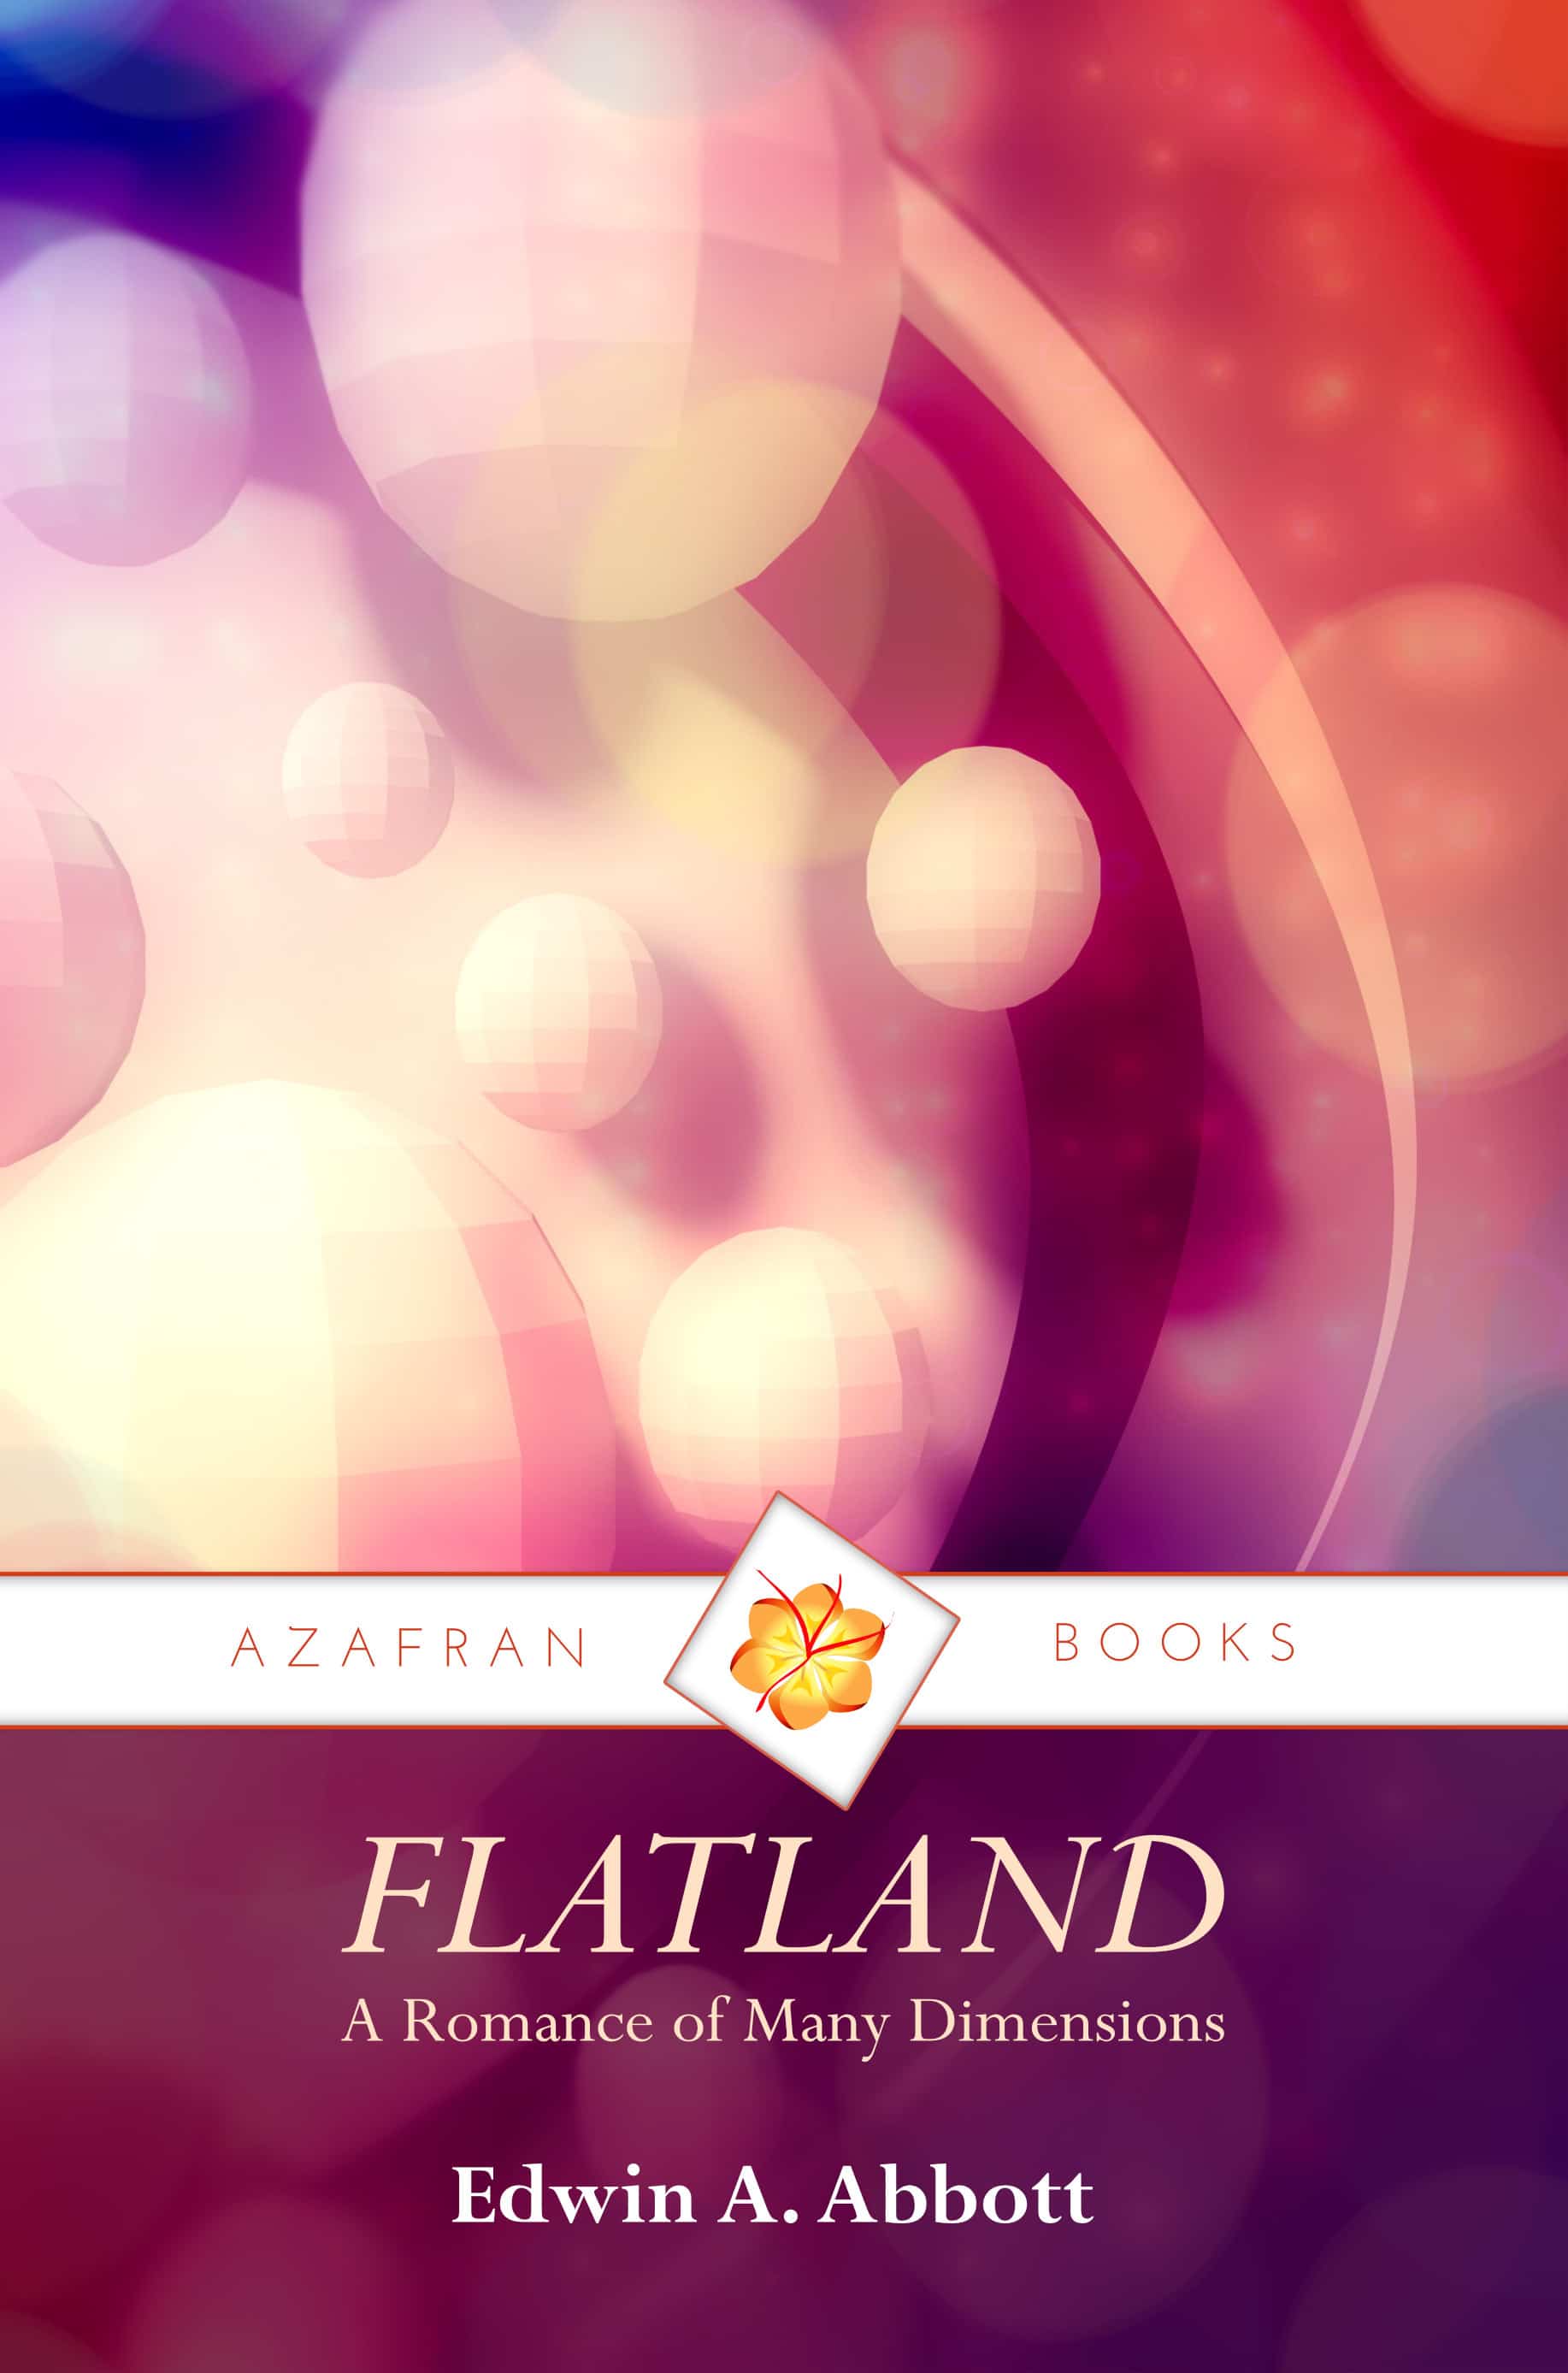 flatland audio book